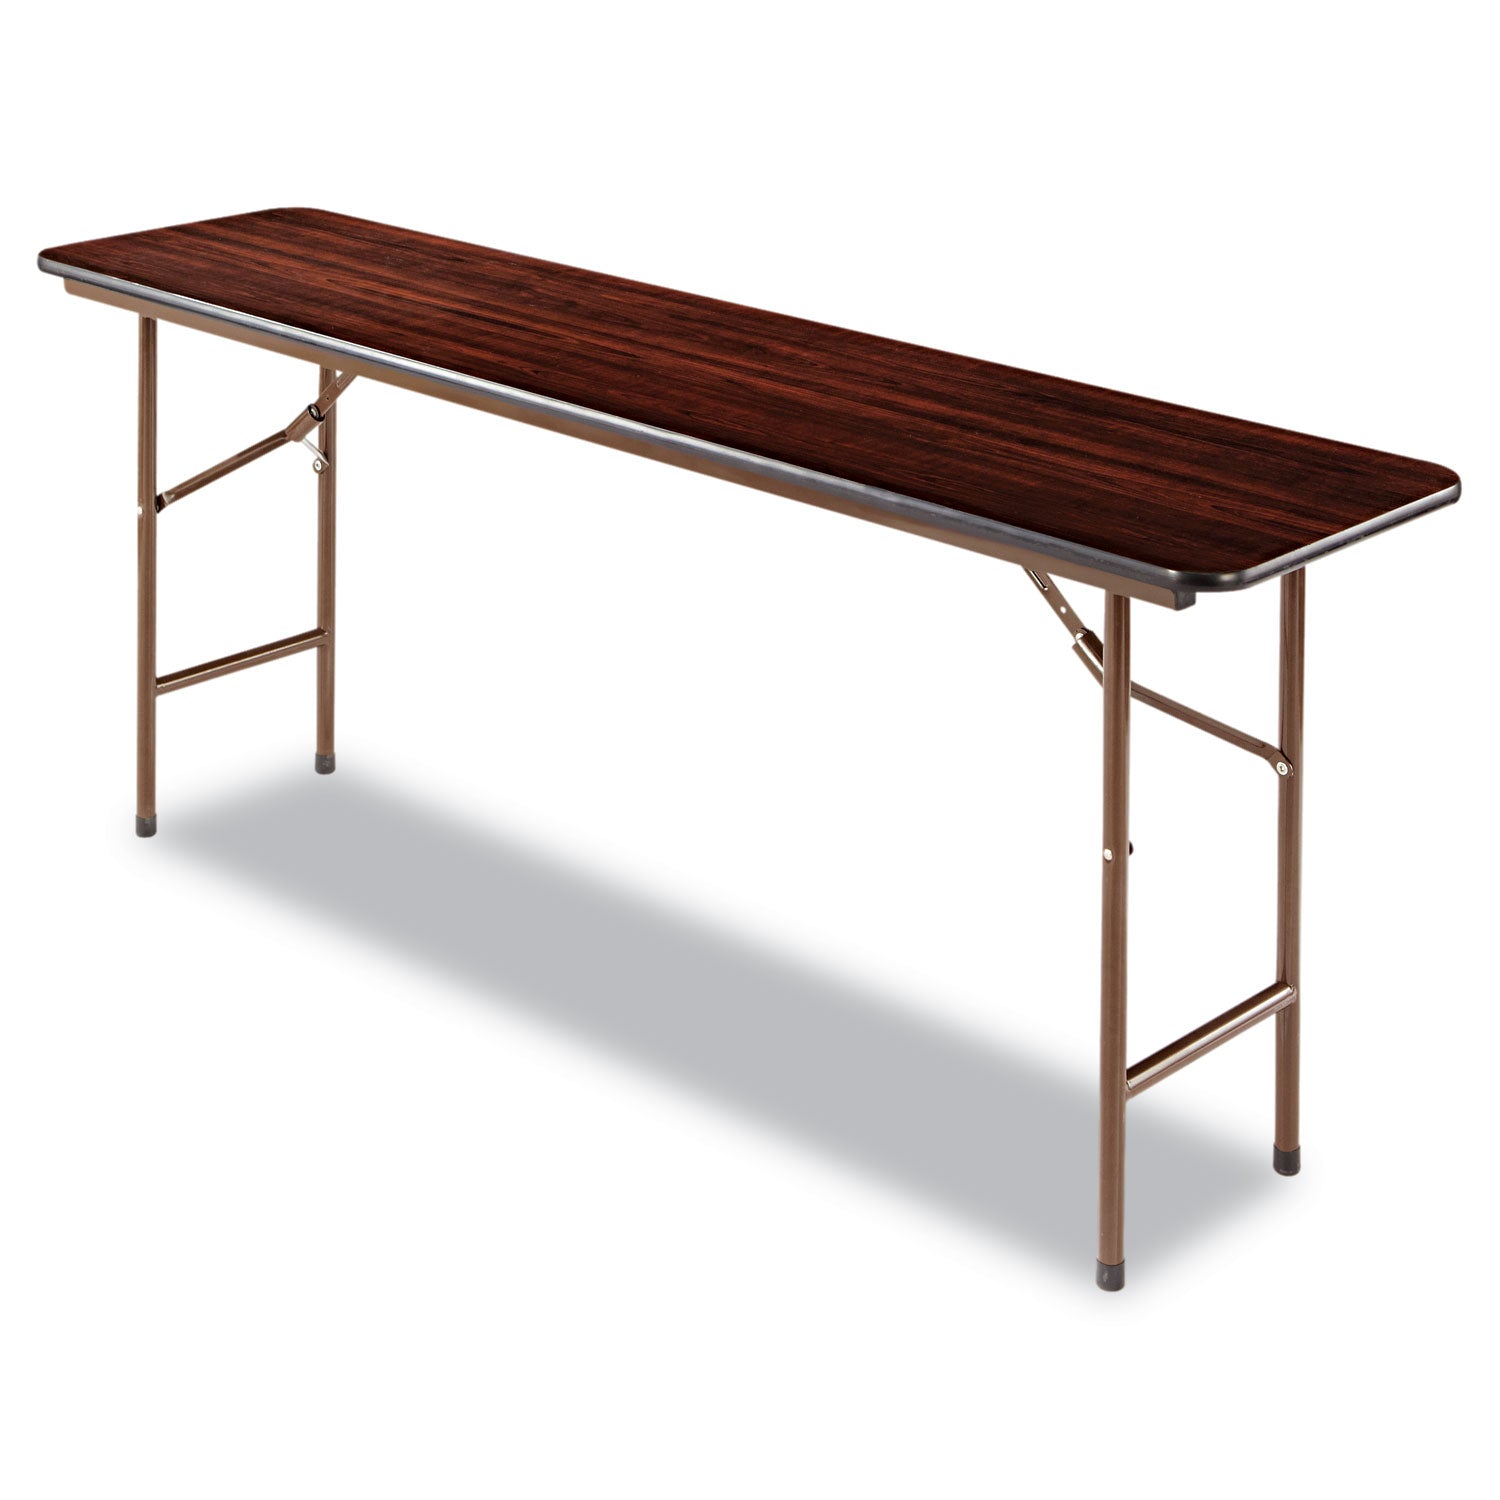 wood-folding-table-rectangular-7188w-x-1775d-x-2913h-mahogany_aleft727218my - 1